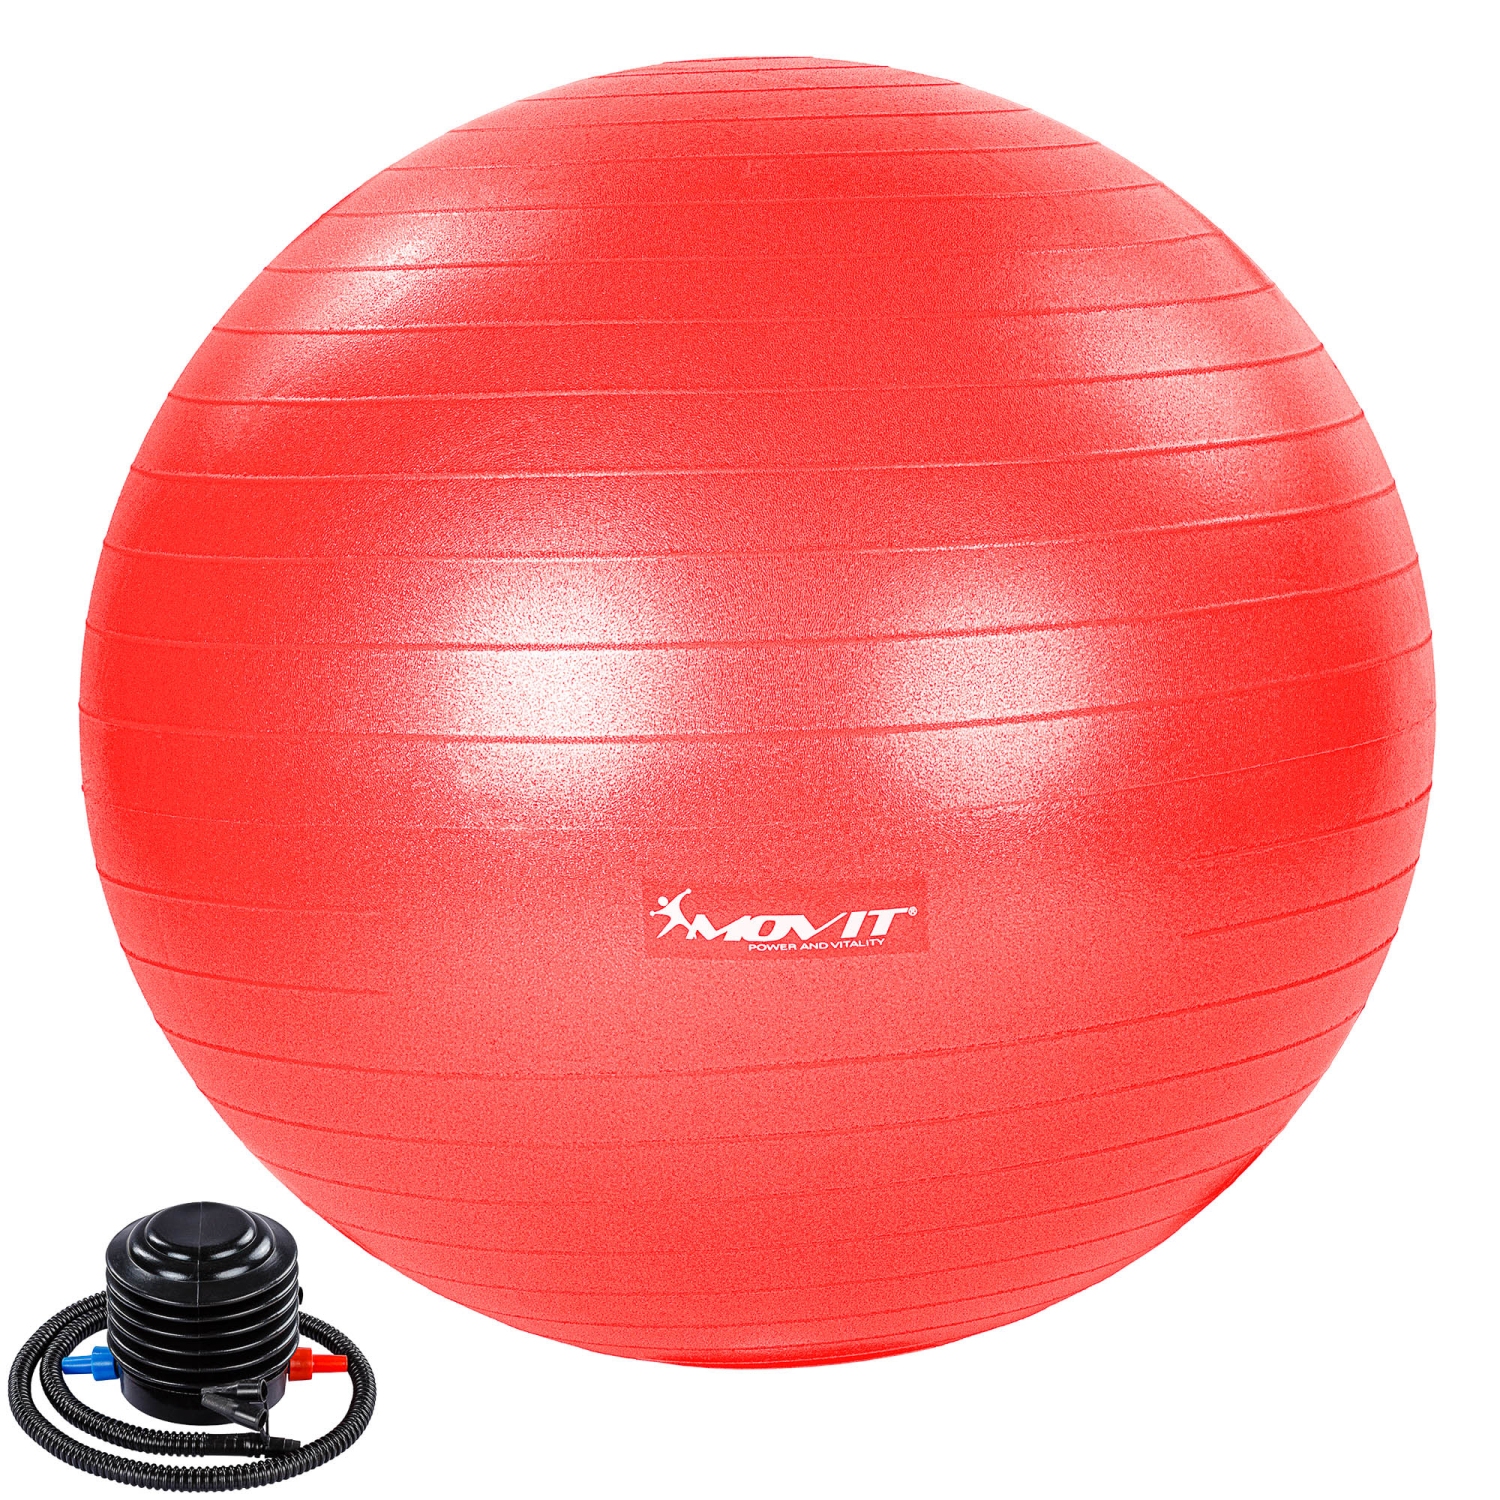 Yoga bal – Pilates bal – Fitness bal – 75 cm – Inclusief pomp – Rood